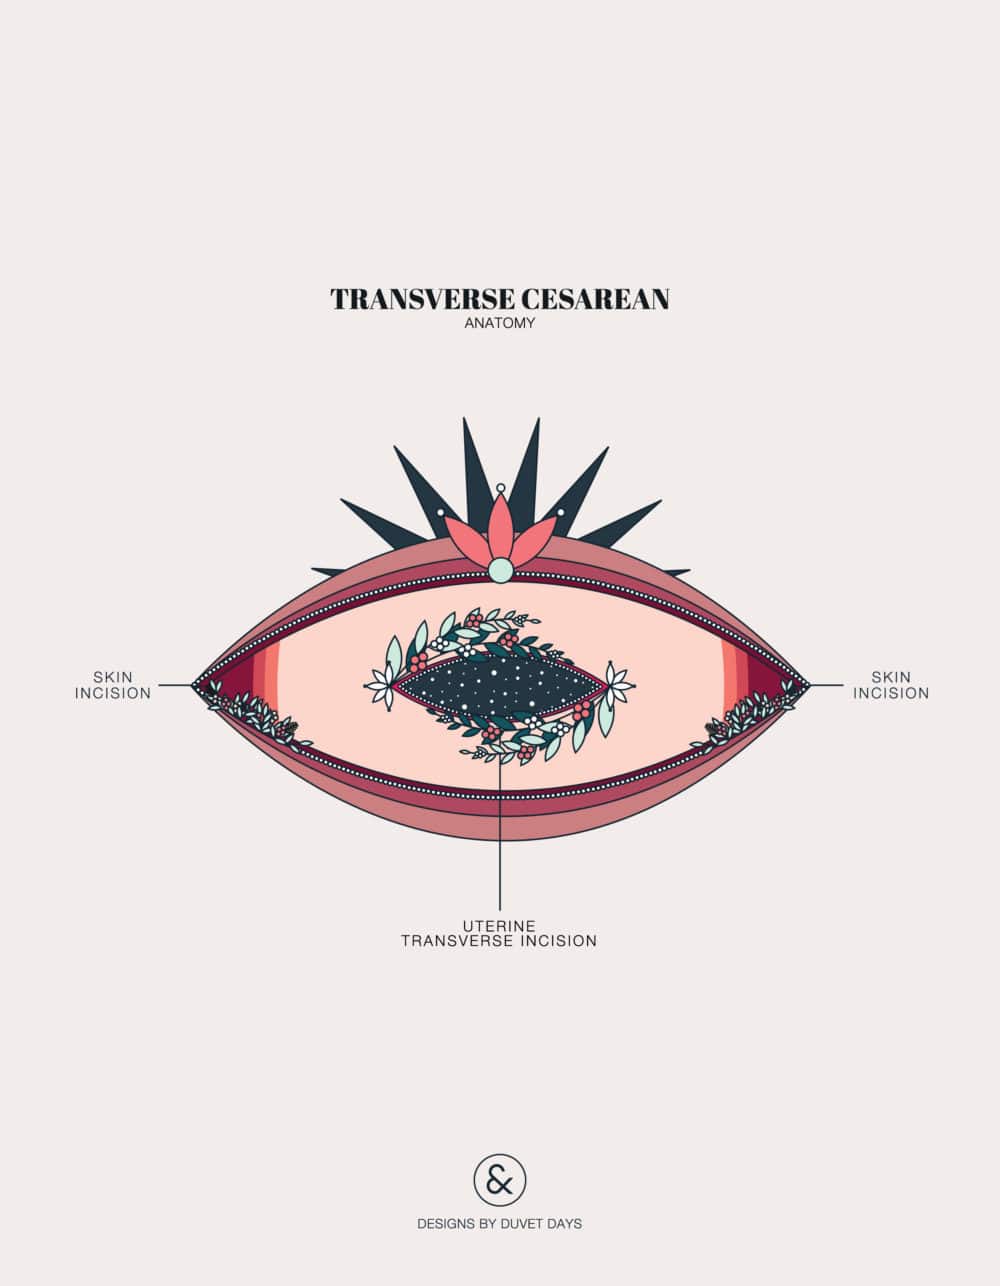 Duvet Days_Anatomy Illustrations_8.5x11_Transverse Cesarean-17